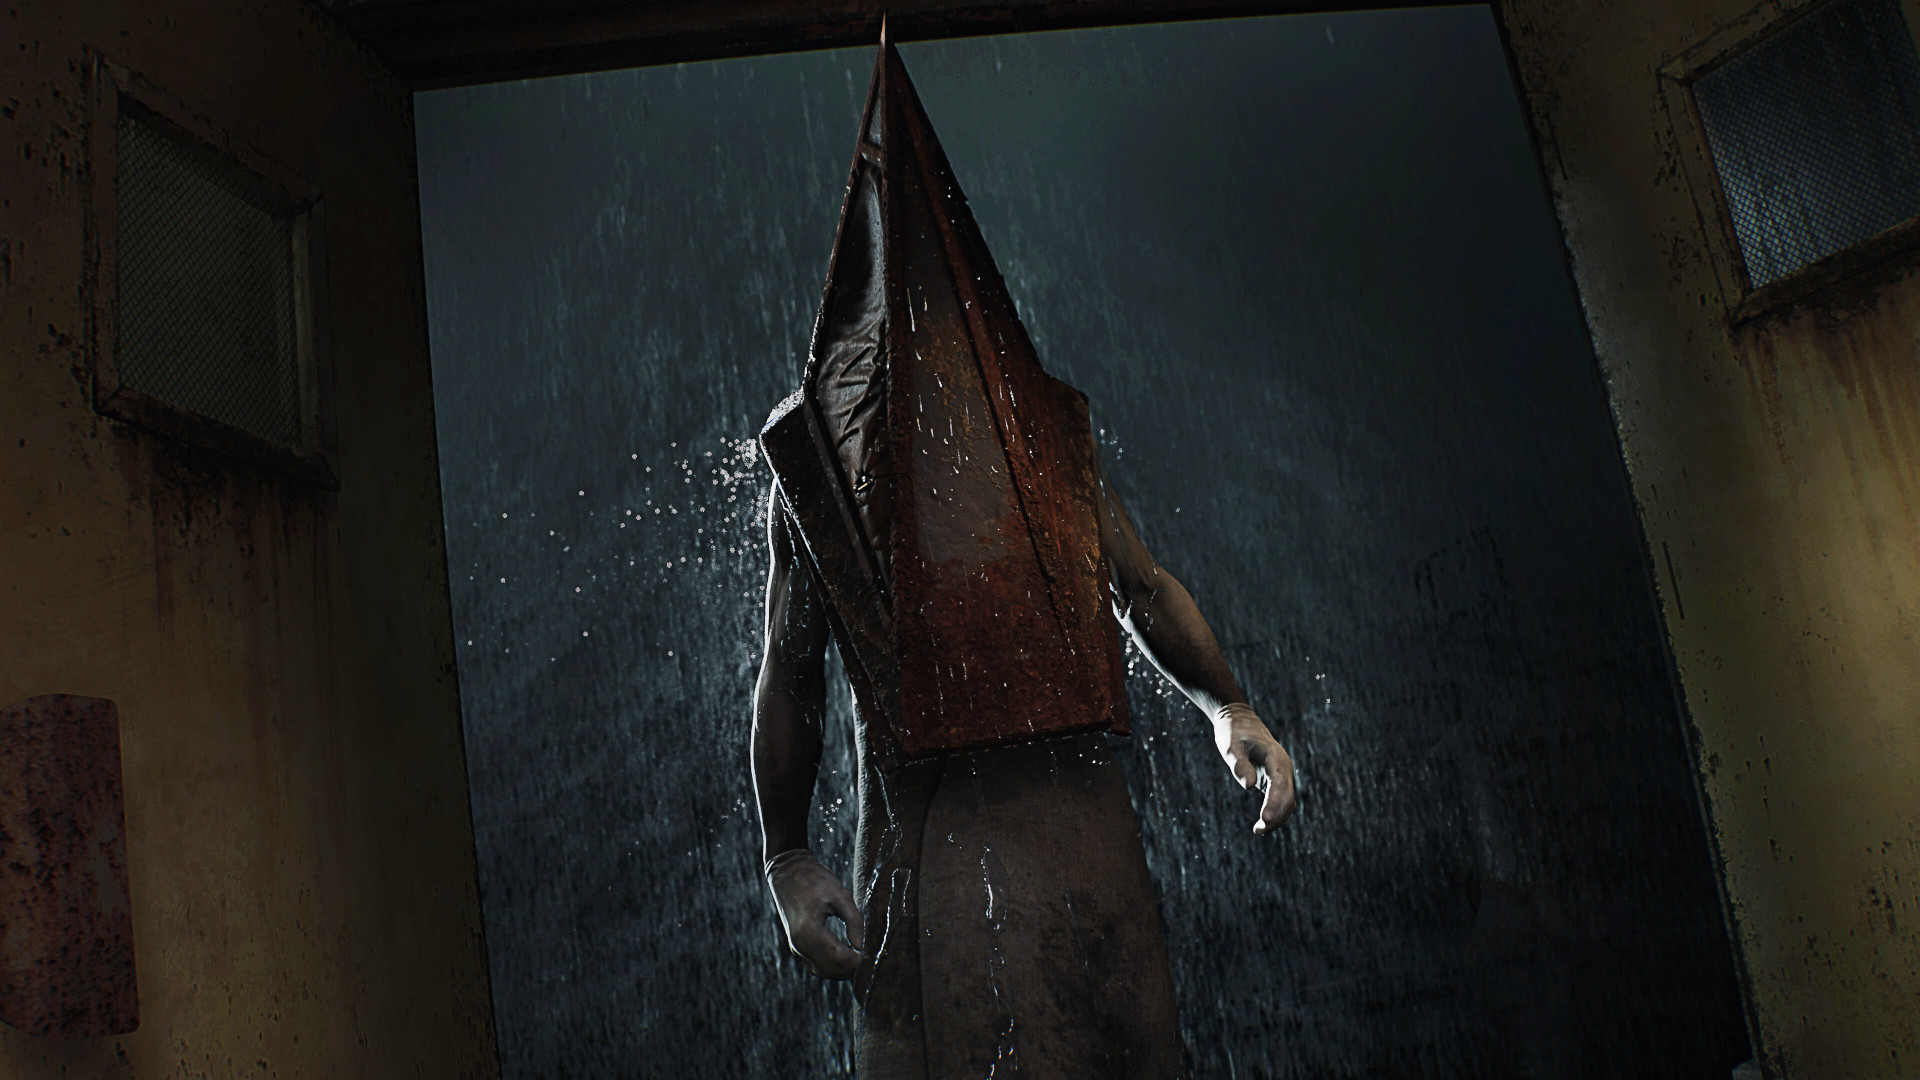 Silent Hill 2 systeemvereisten bevelen Windows 11 aan